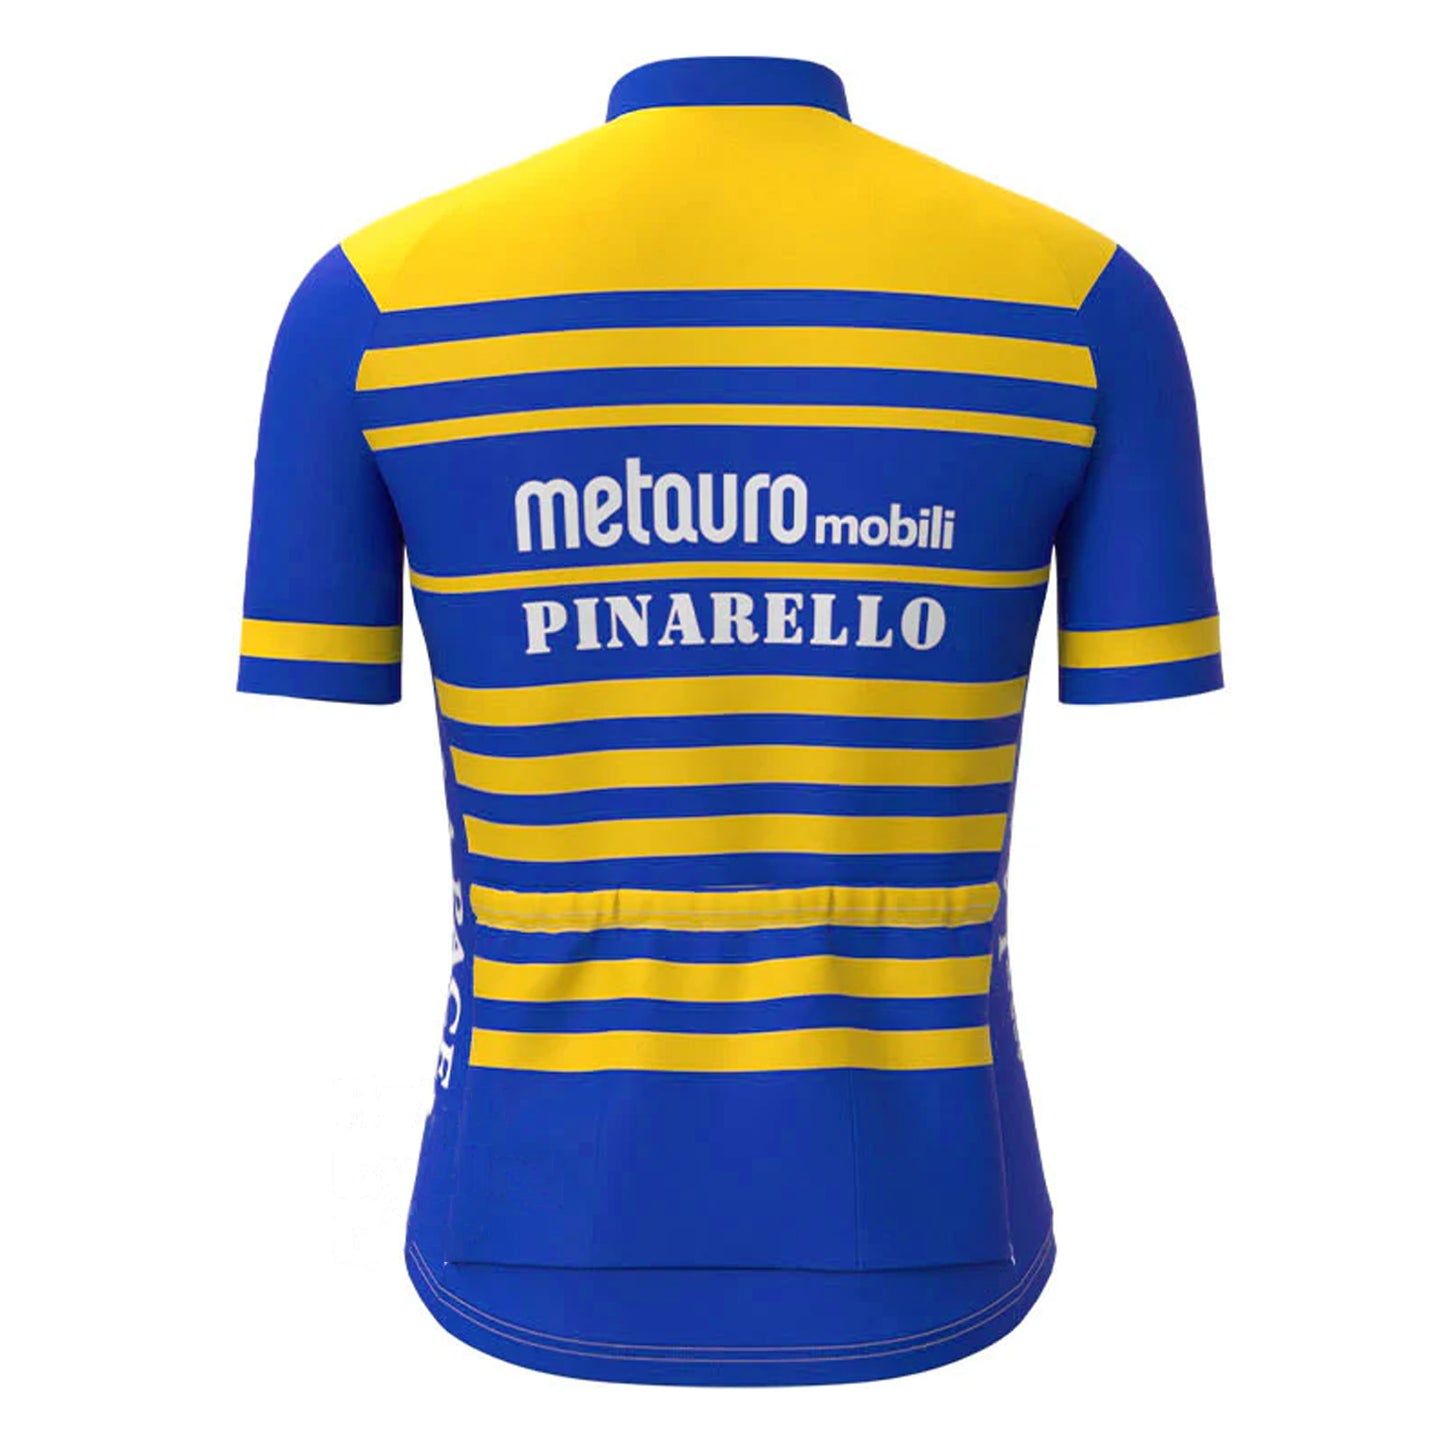 Metquro Mobili Pinarello Blue Yellow Vintage Short Sleeve Cycling Jersey Top